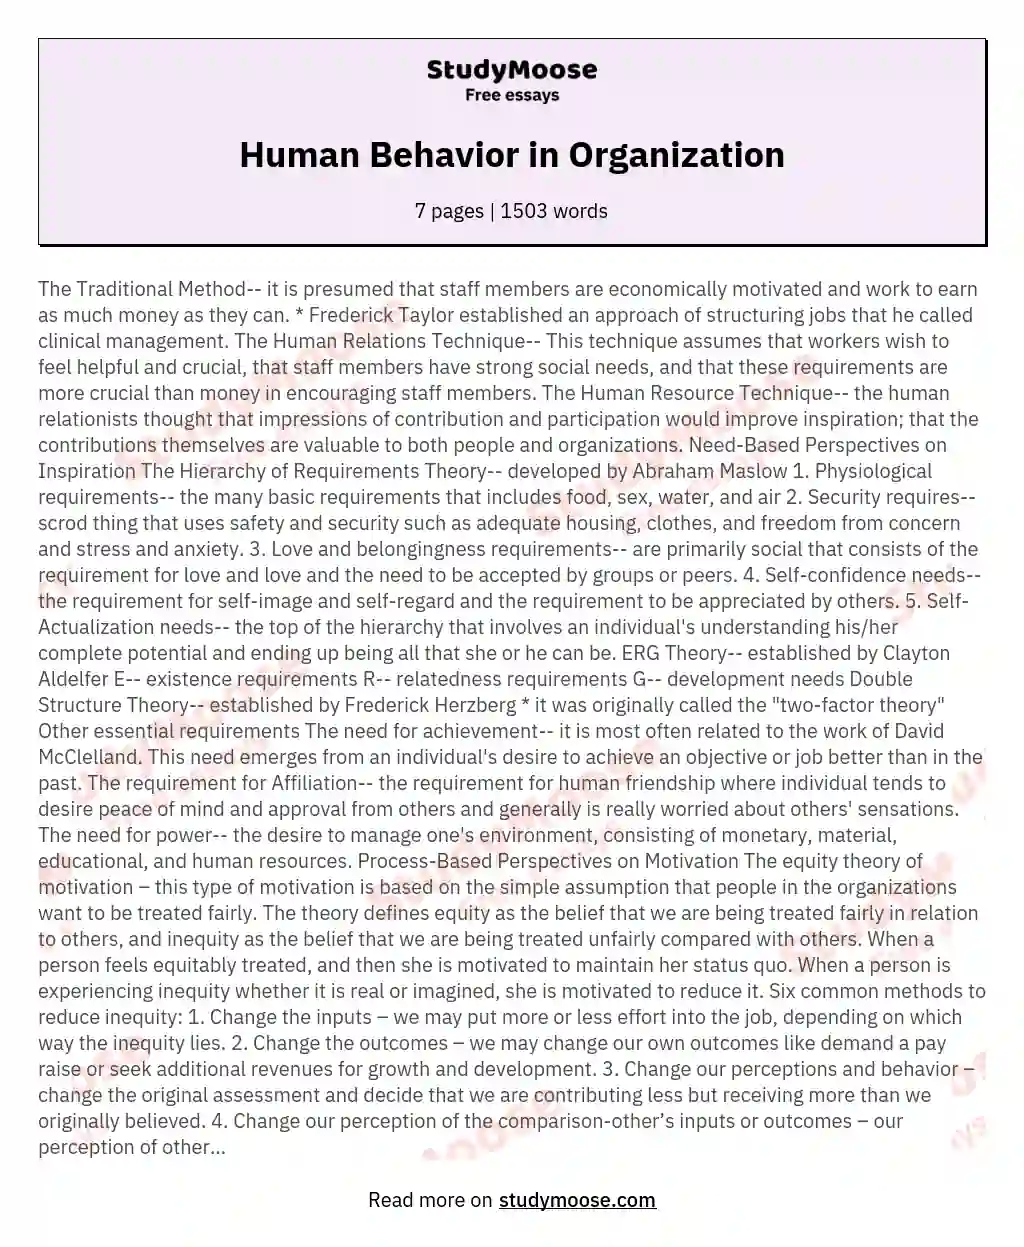 Human Behavior in Organization